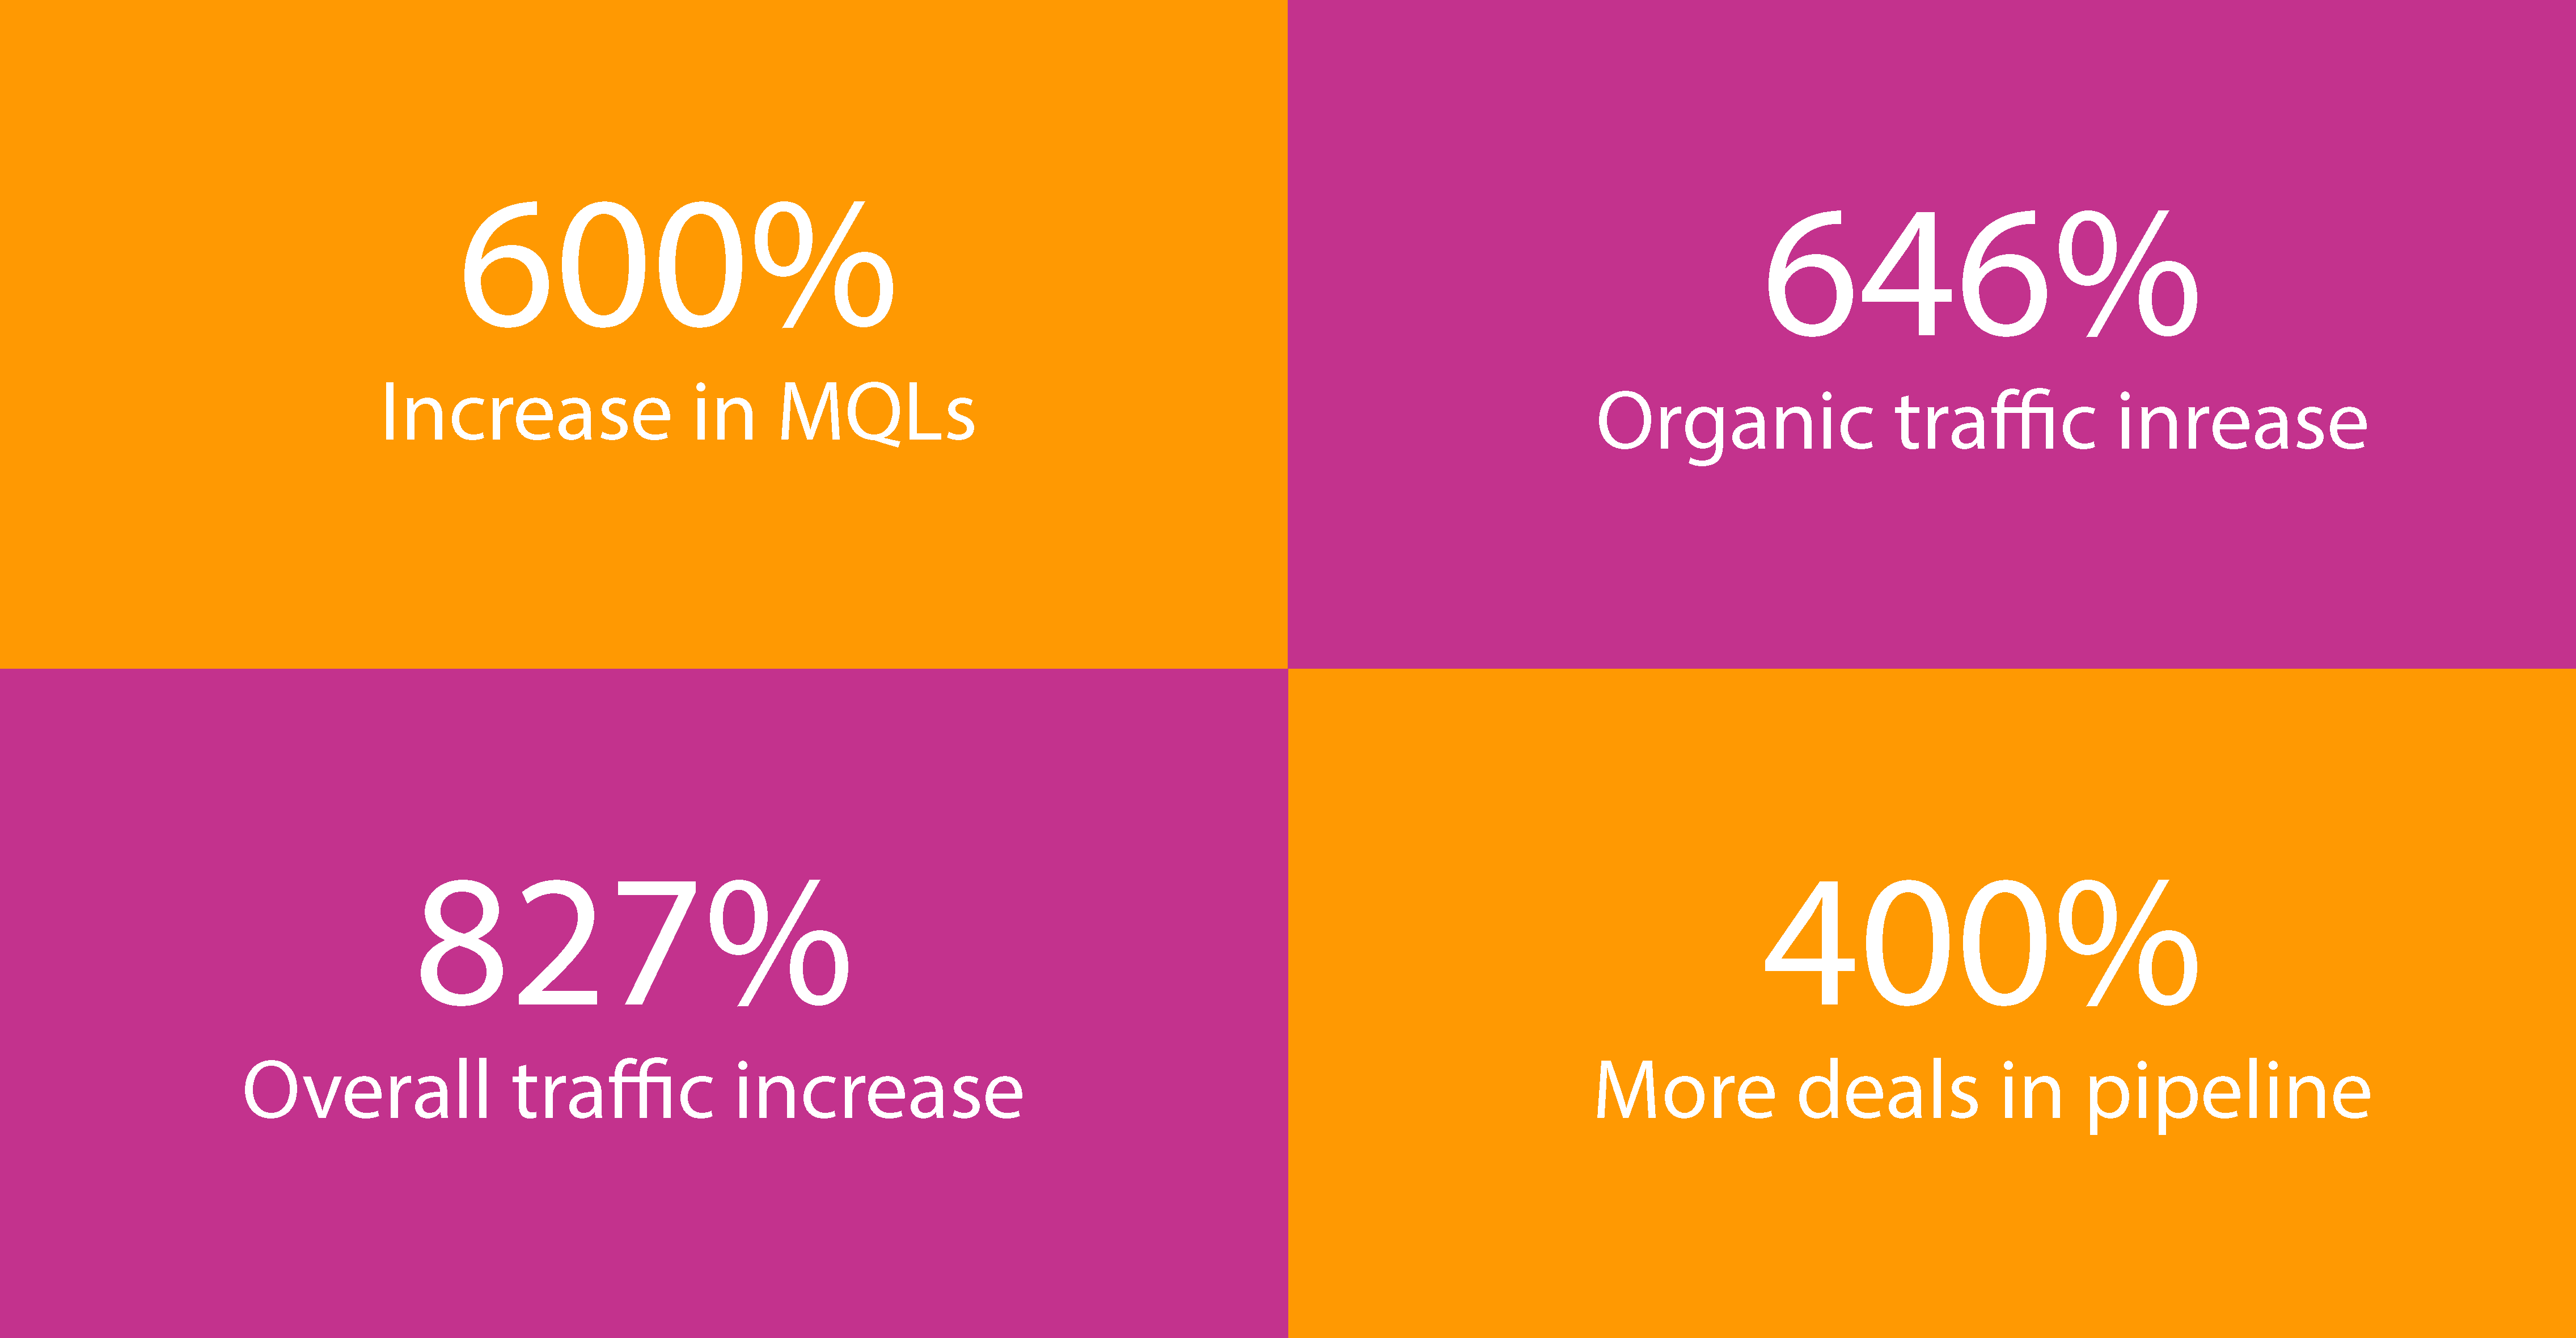 600% increase in mqls, 646% organic traffic increase, 400% more deals in pipeline